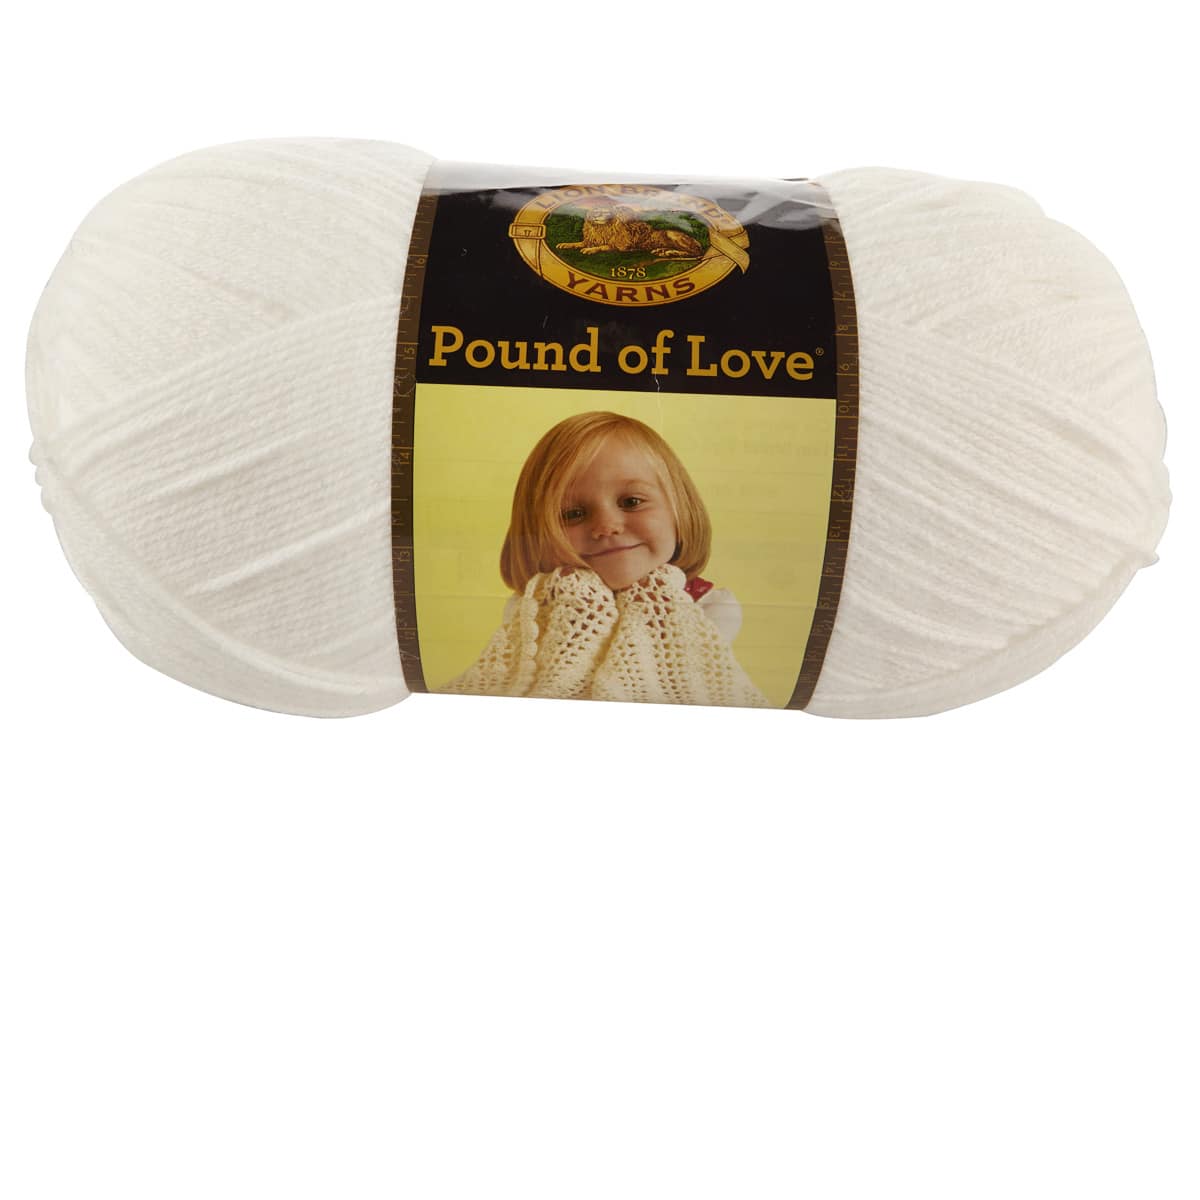  Lion Brand Yarn Pound of Love, Value Yarn, Large Yarn